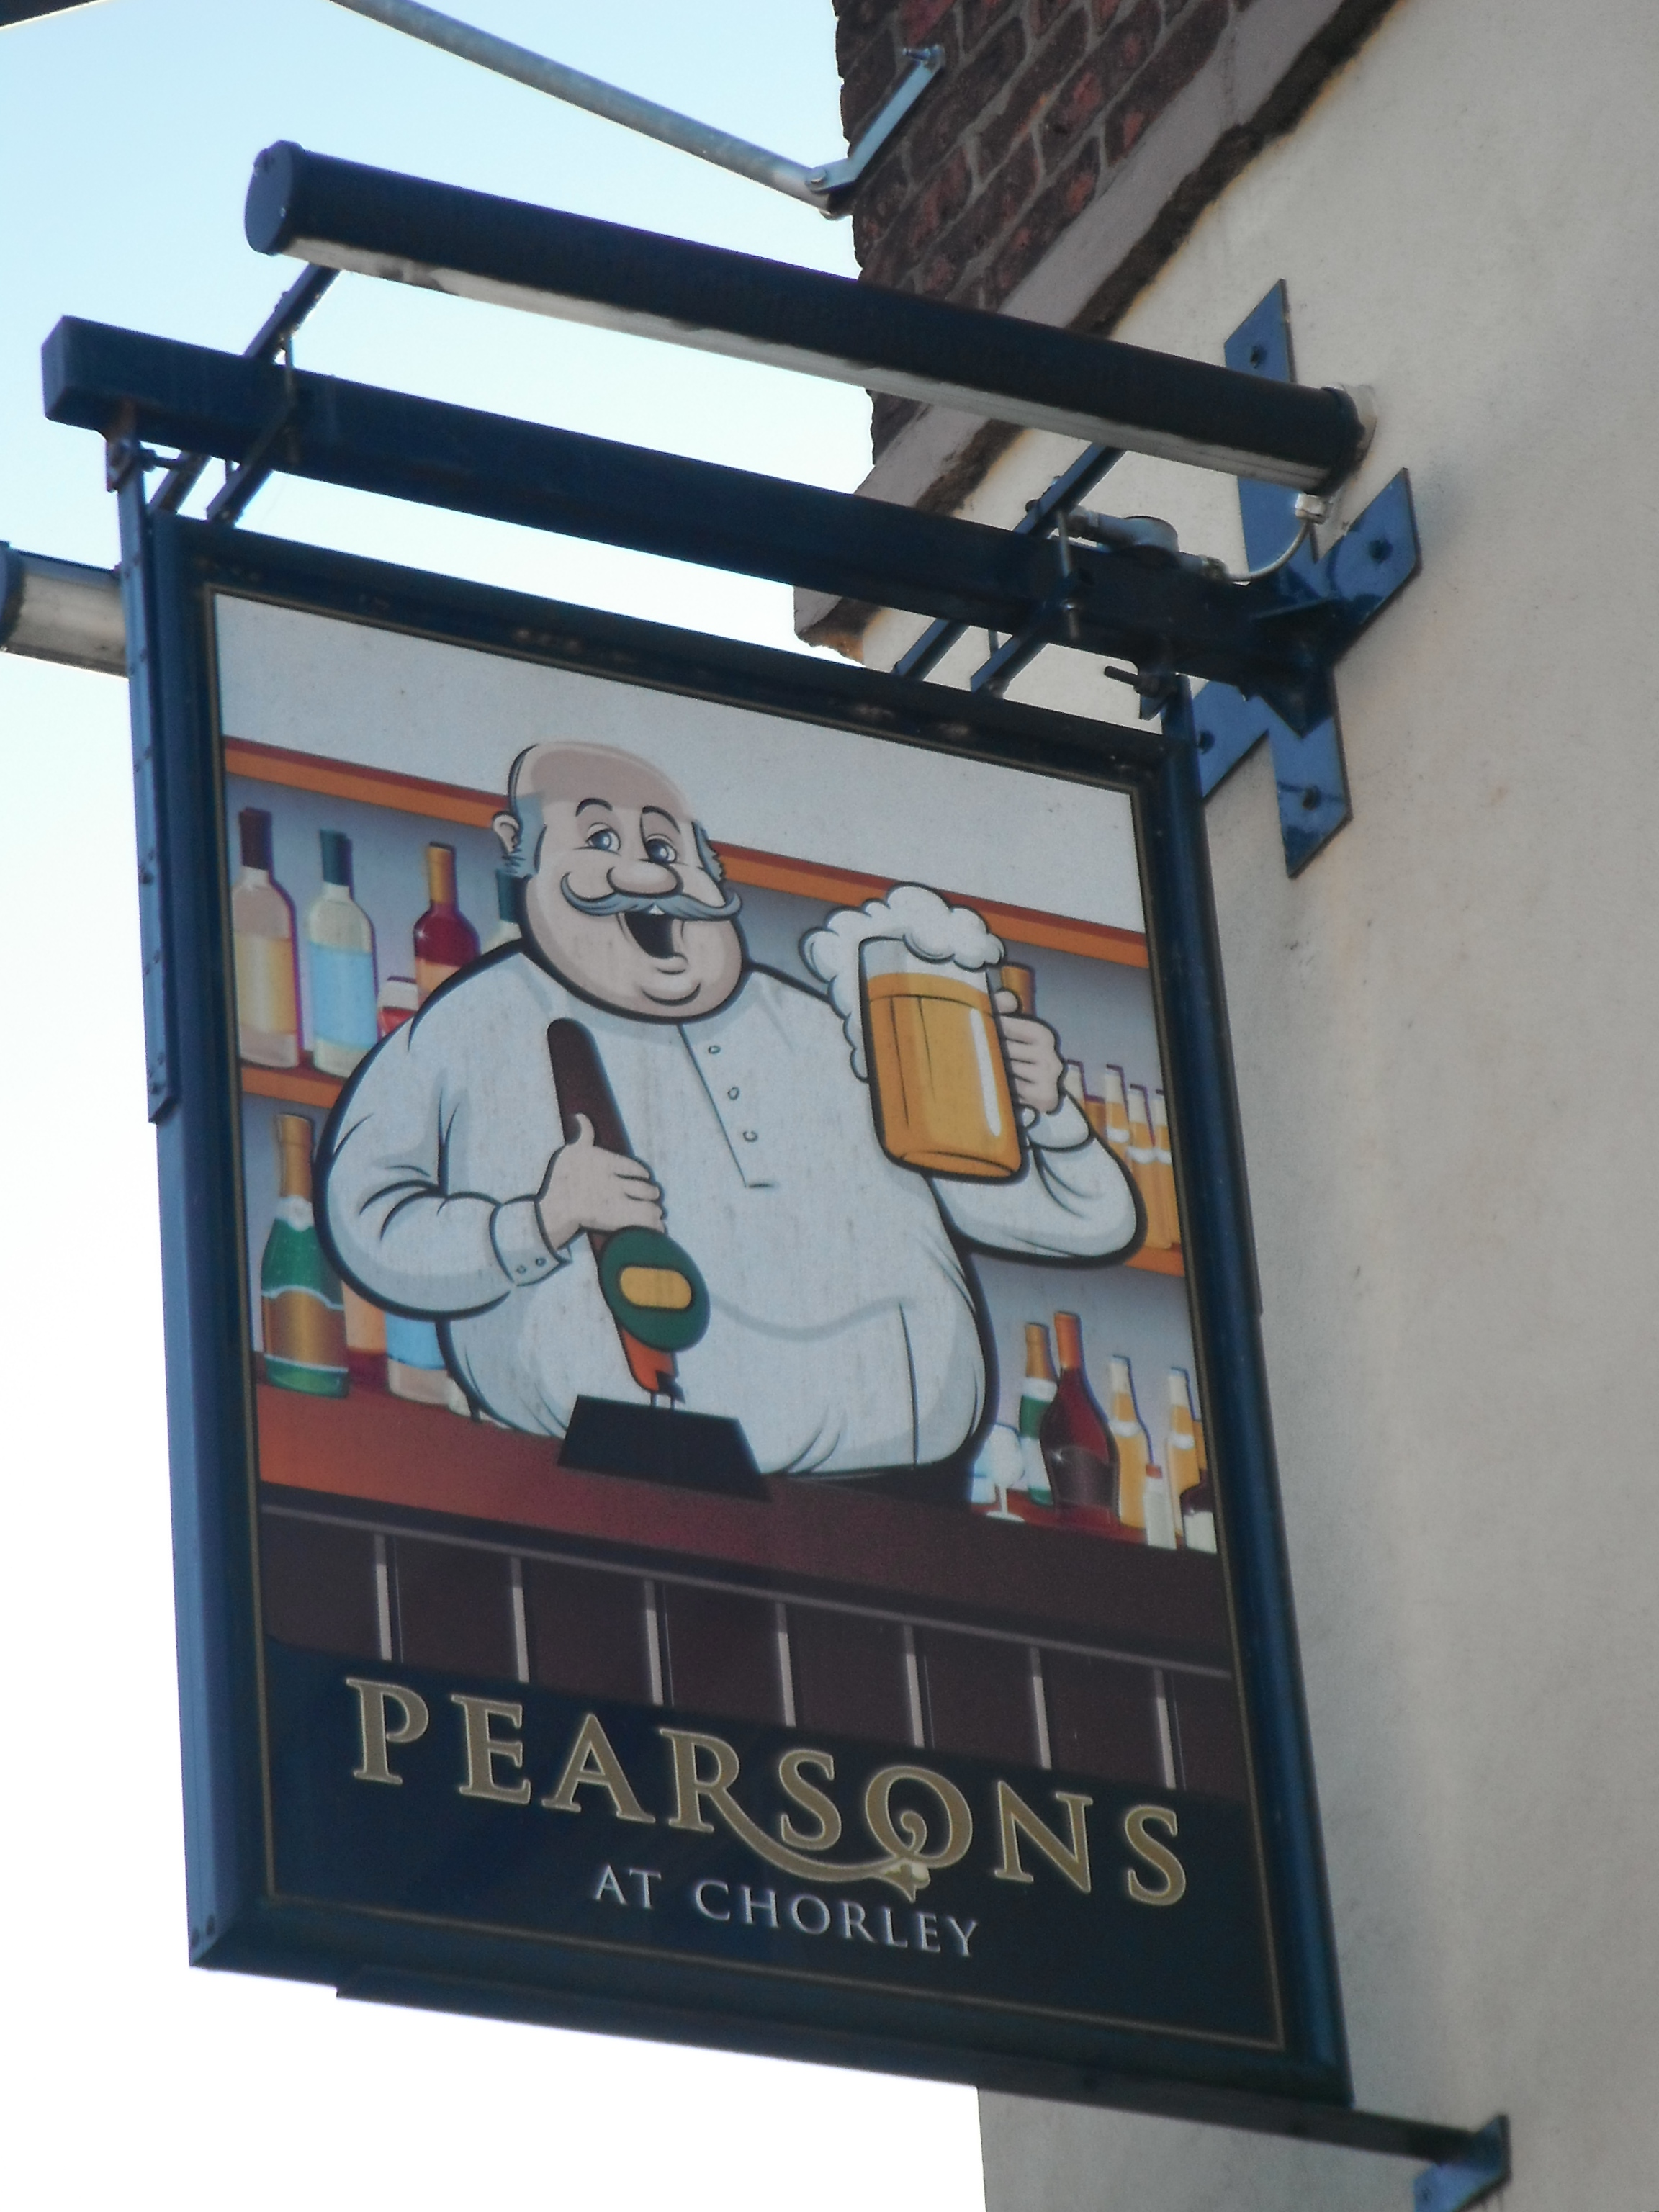 Photo taken by me – Pearsons pub Sign, Chorlton